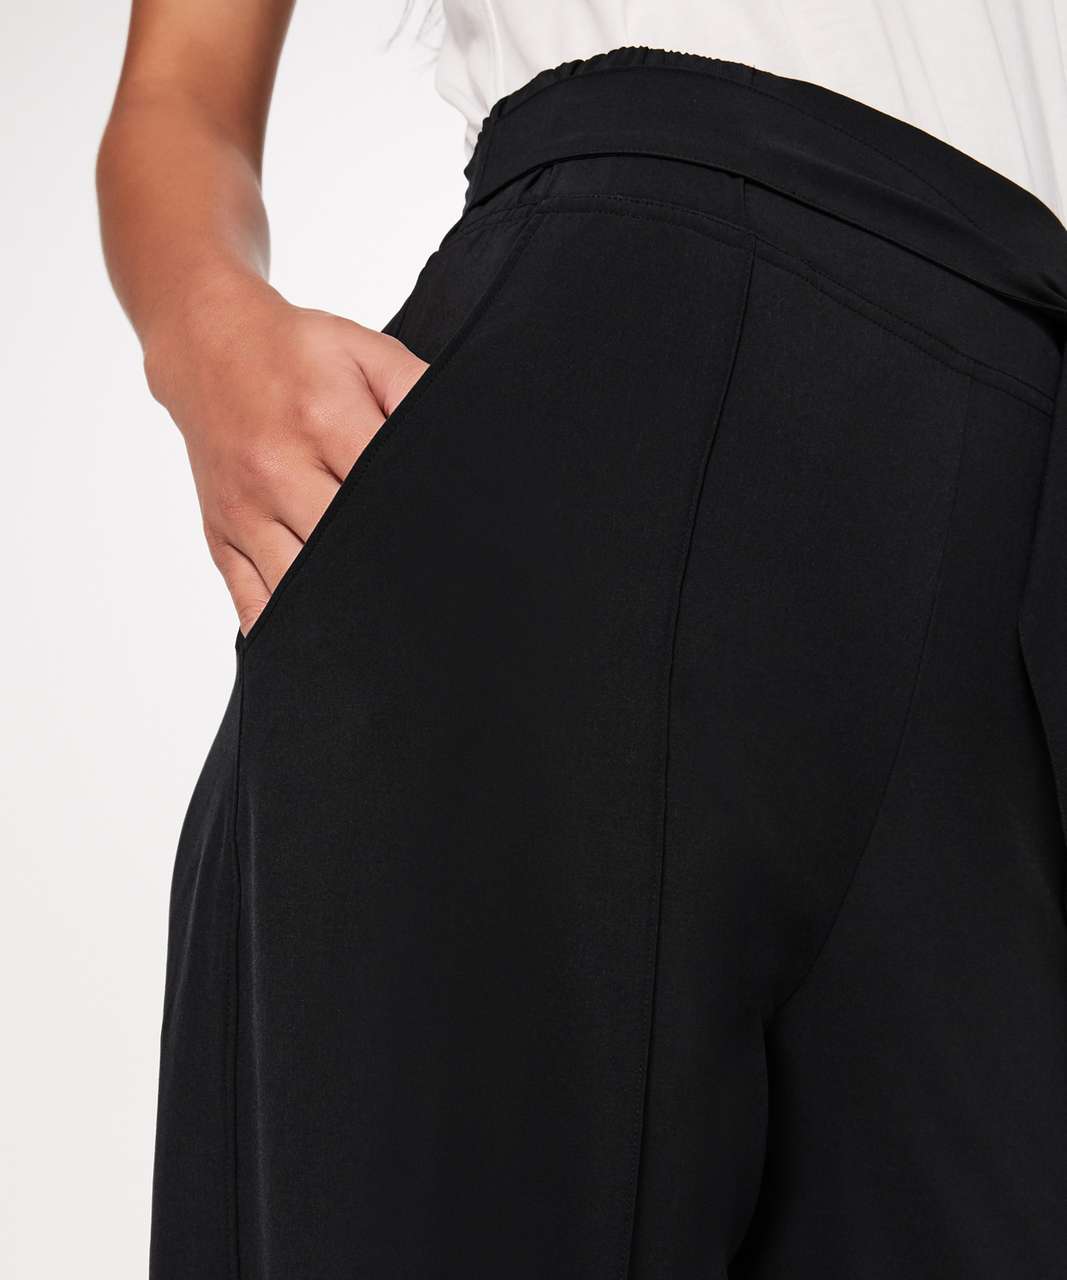 Lululemon Noir Pant Black Size 6 - $65 (45% Off Retail) - From Julissa